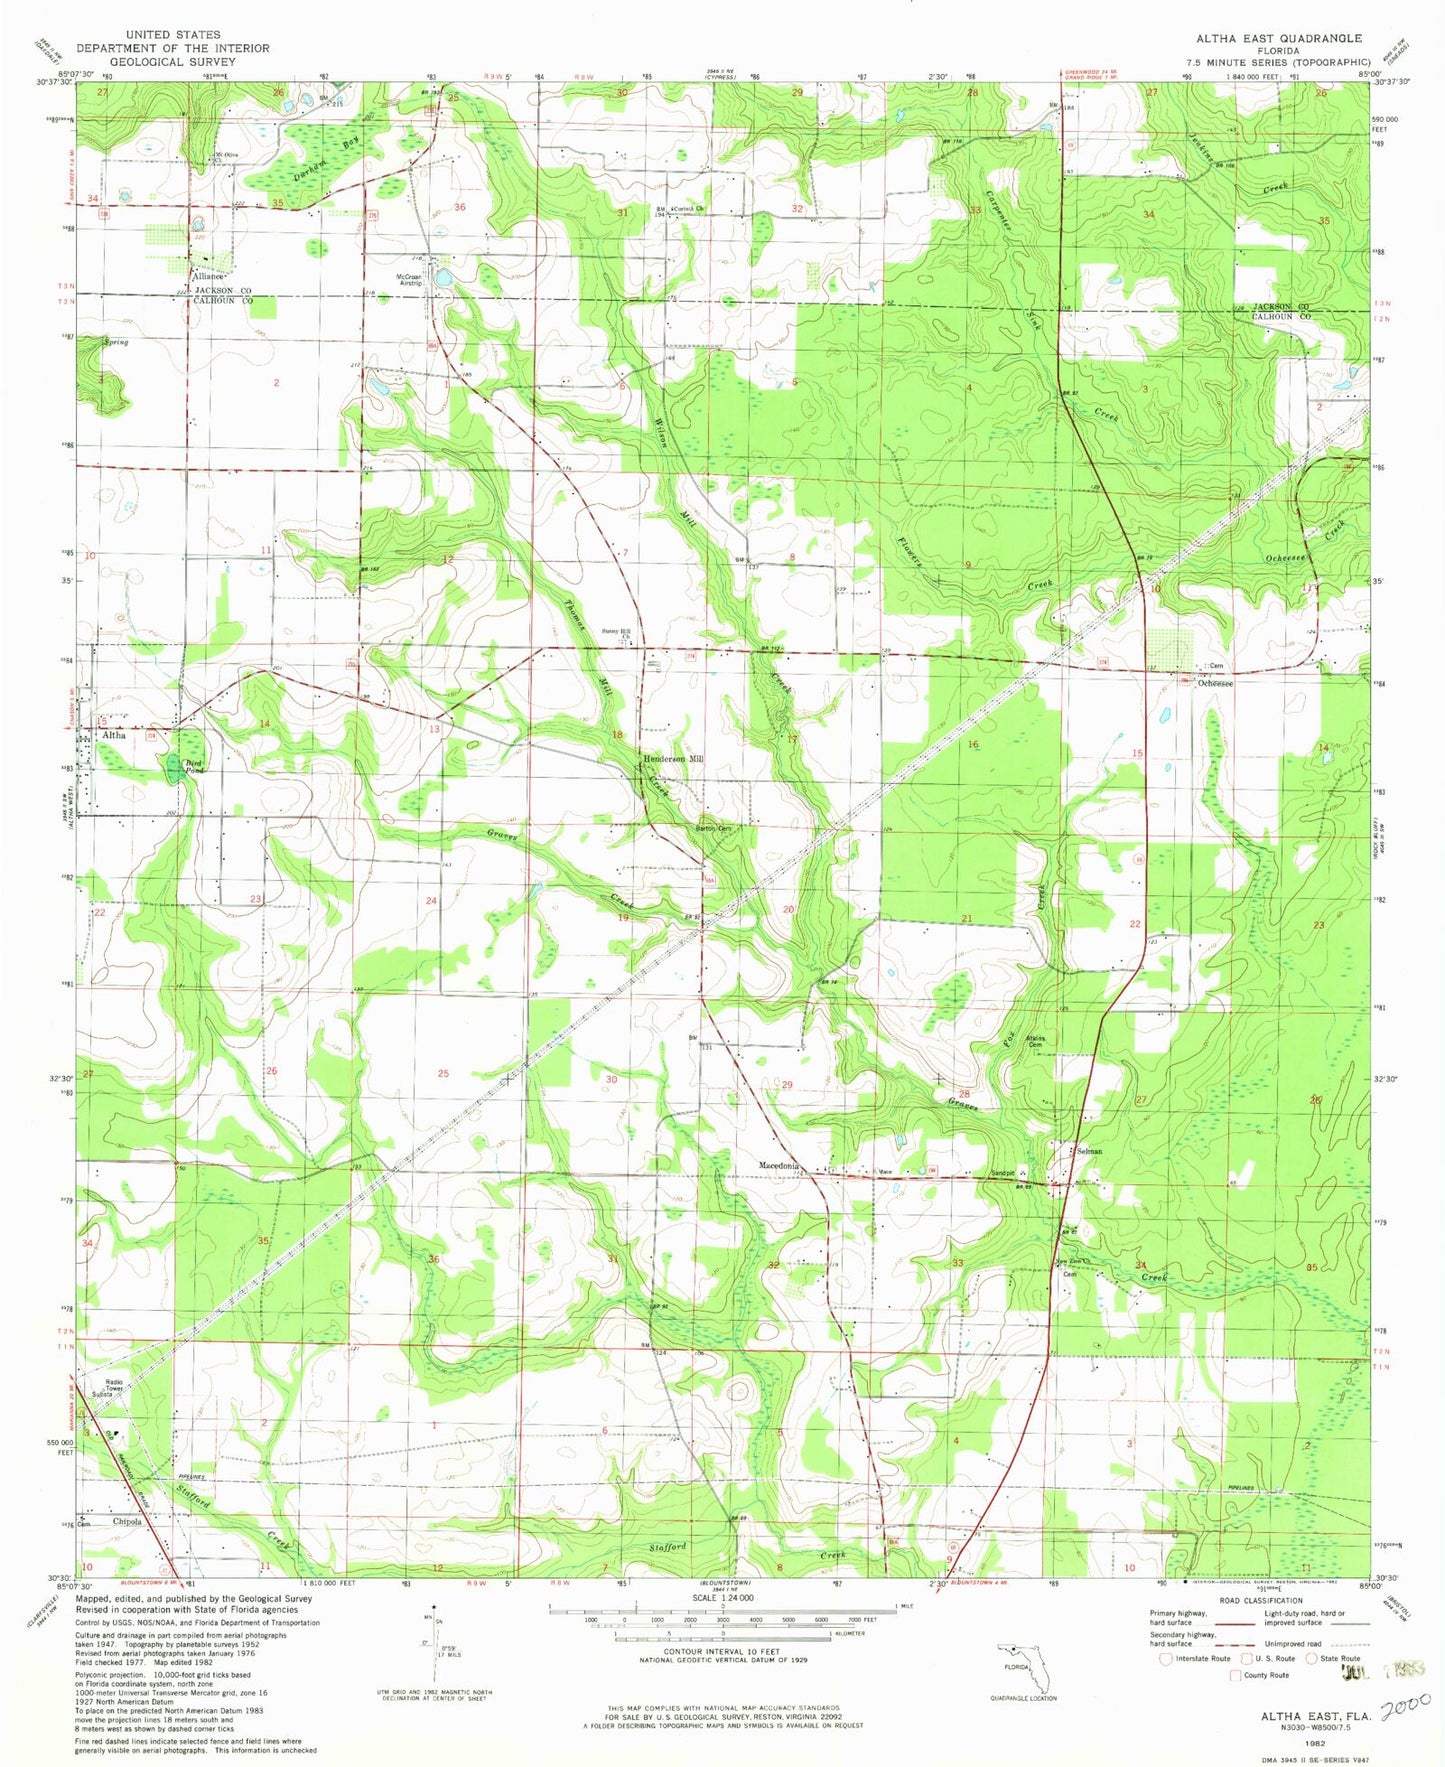 Classic USGS Altha East Florida 7.5'x7.5' Topo Map Image